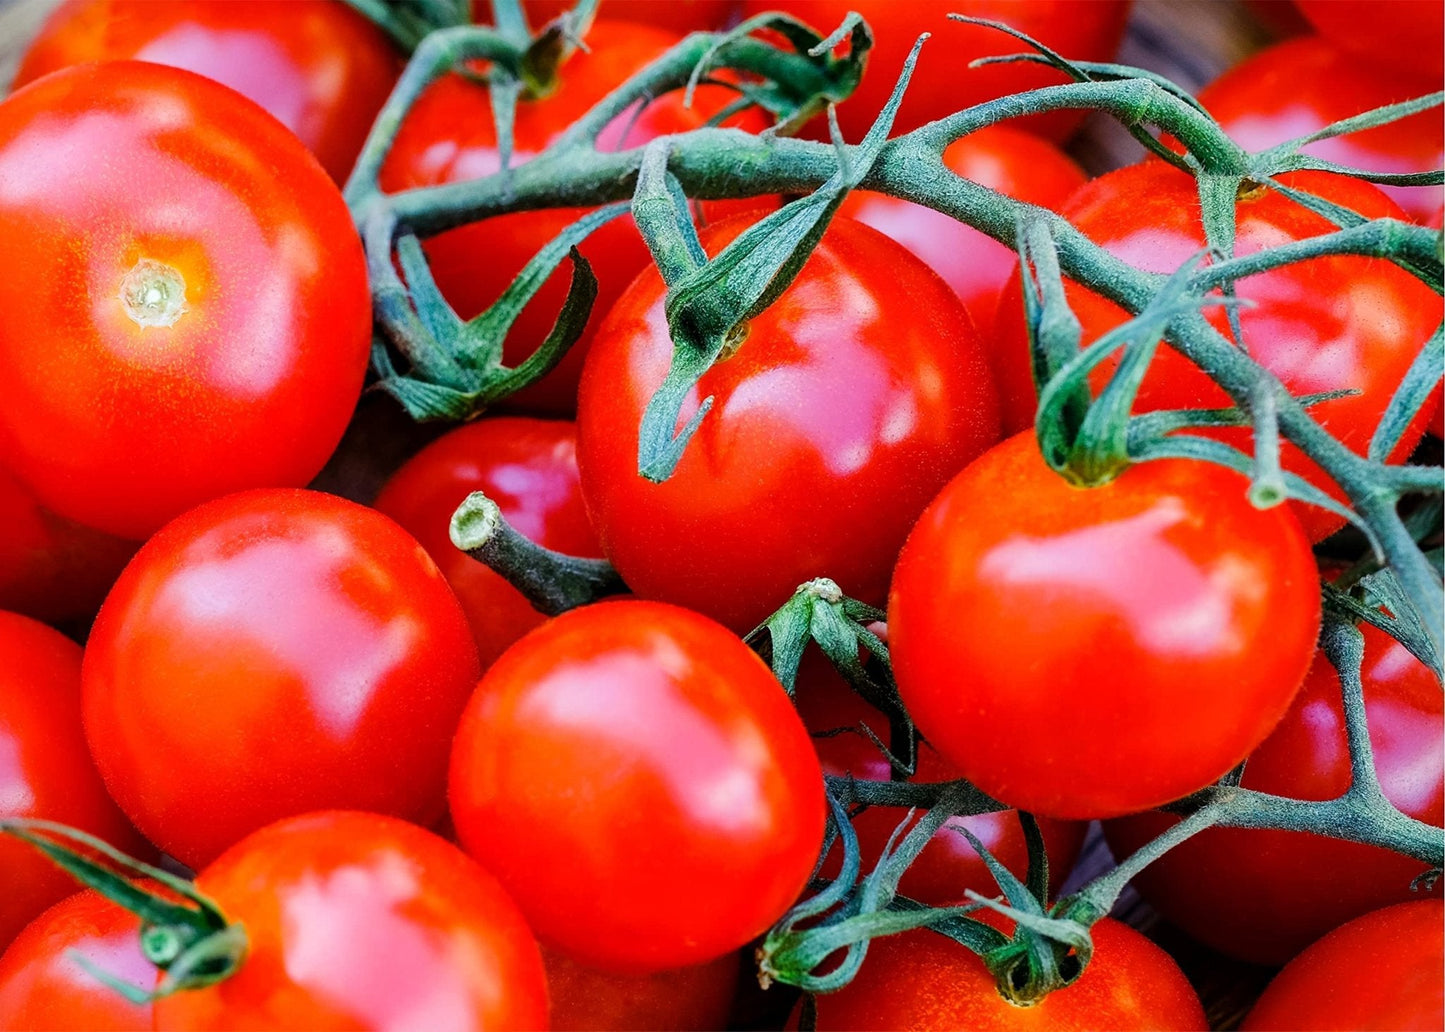 Tomato Plants - 'Gardener's Delight' - 3 x Full Plants in 9cm Pots - AcquaGarden